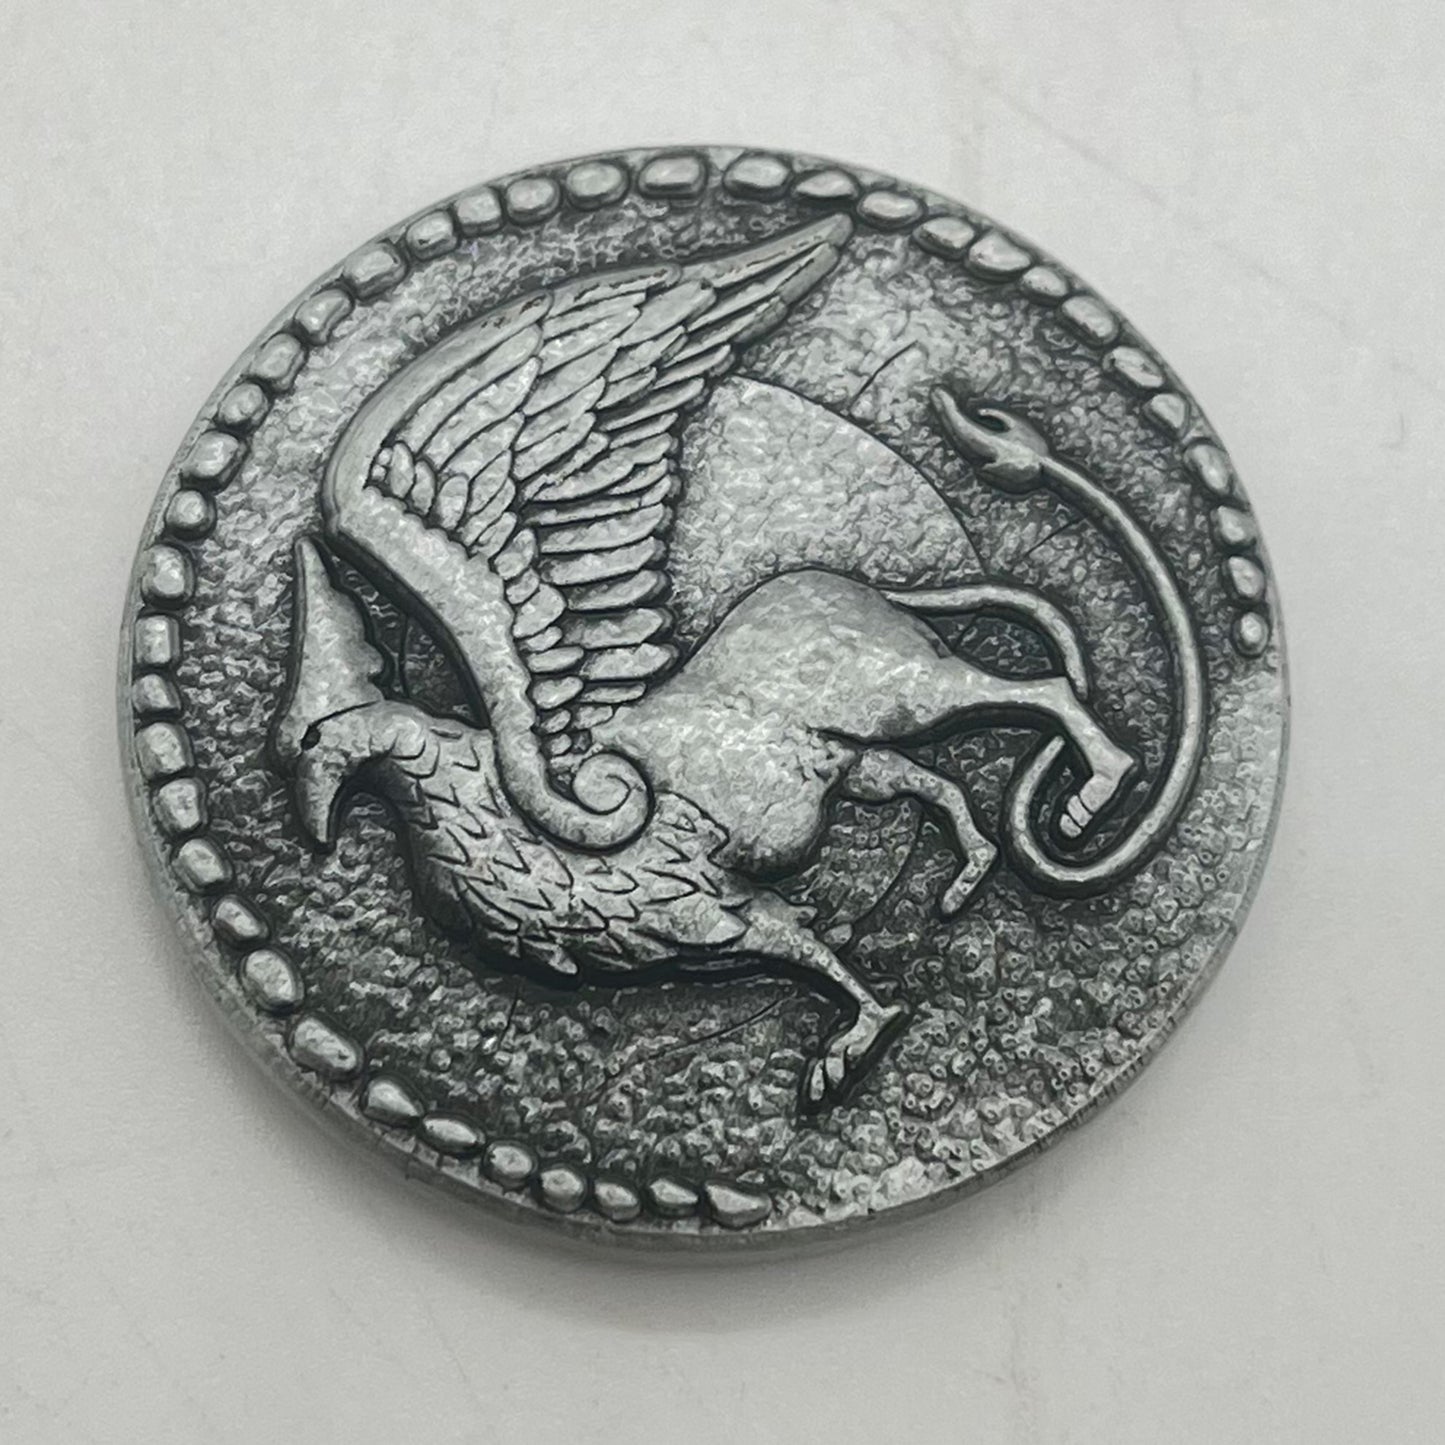 Coin of Shinare